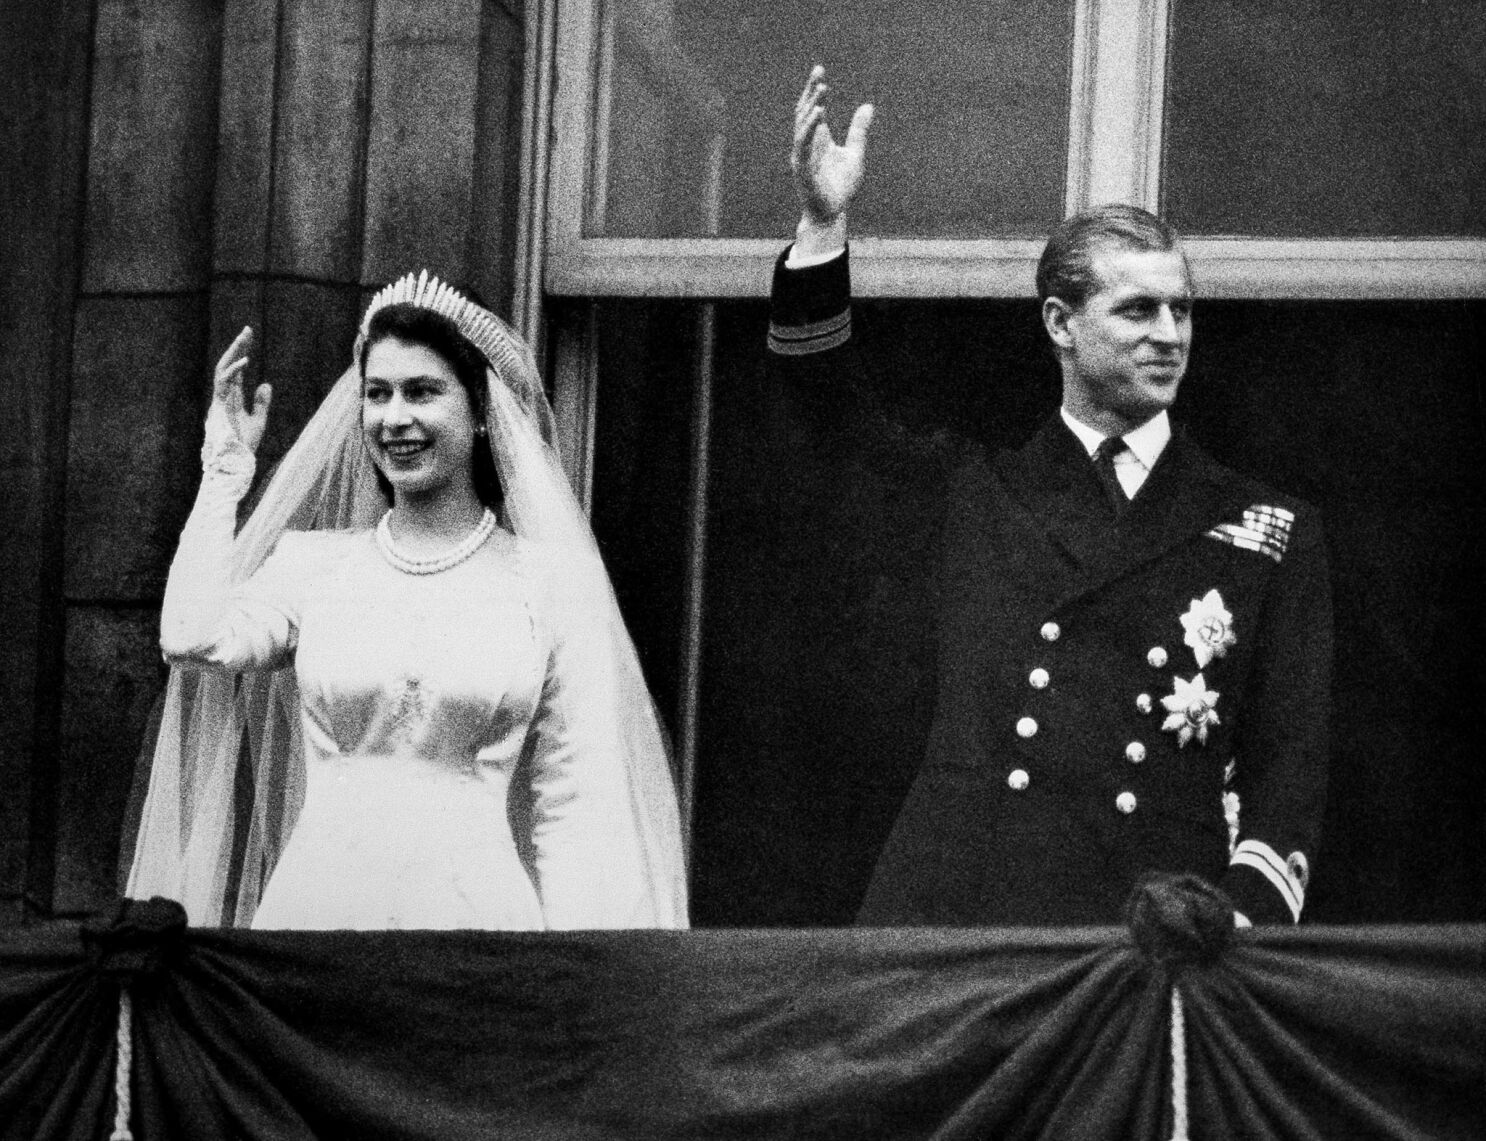 Wedding of HRH Princess Elizabeth to Philip Mountbatten 1947 New 8x10 Photo 